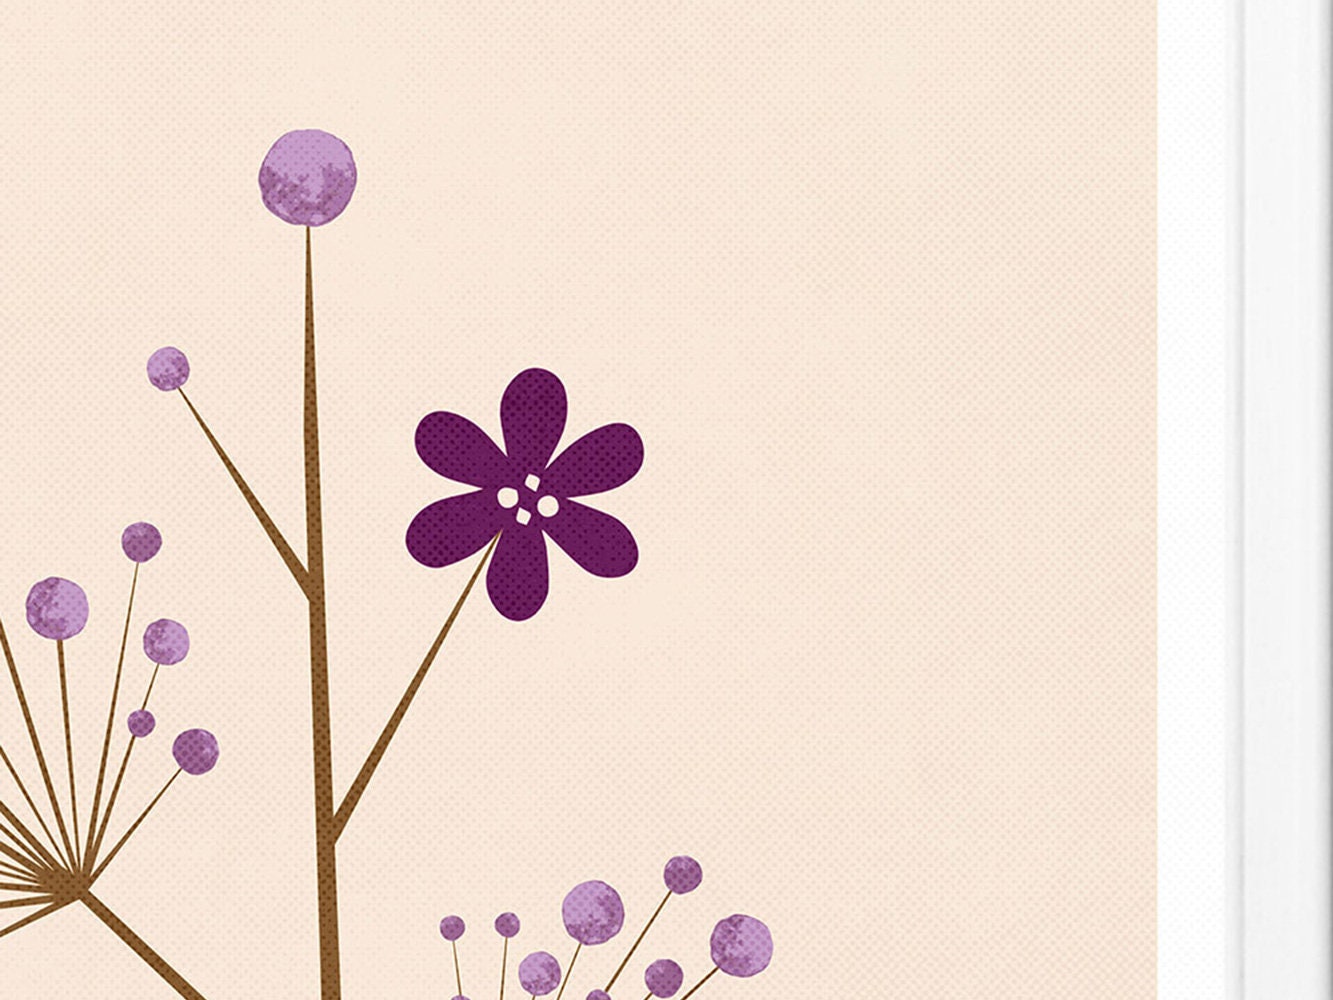 DRUCK ›LILA FLOWER‹ / Wall Art, Wandbild, Poster, Kunstdruck, Blume, Blätter, Floral, Retro, Design, Pastel